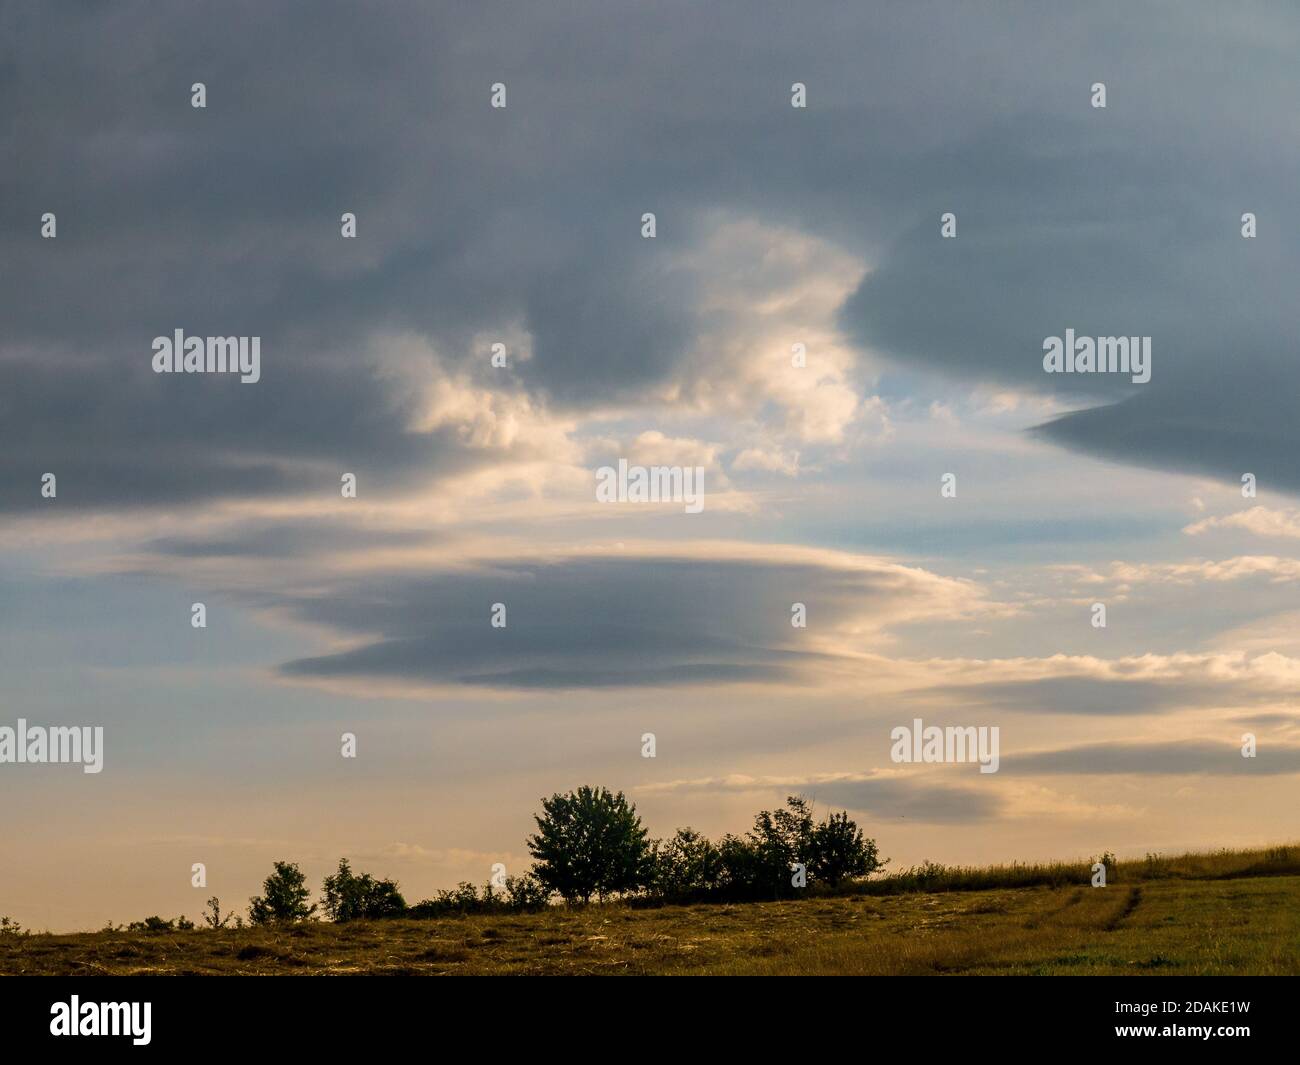 Lentikularwolke - Altocumulus lencularis - seltsame Wolke in der Form eines UFO am Himmel Stockfoto